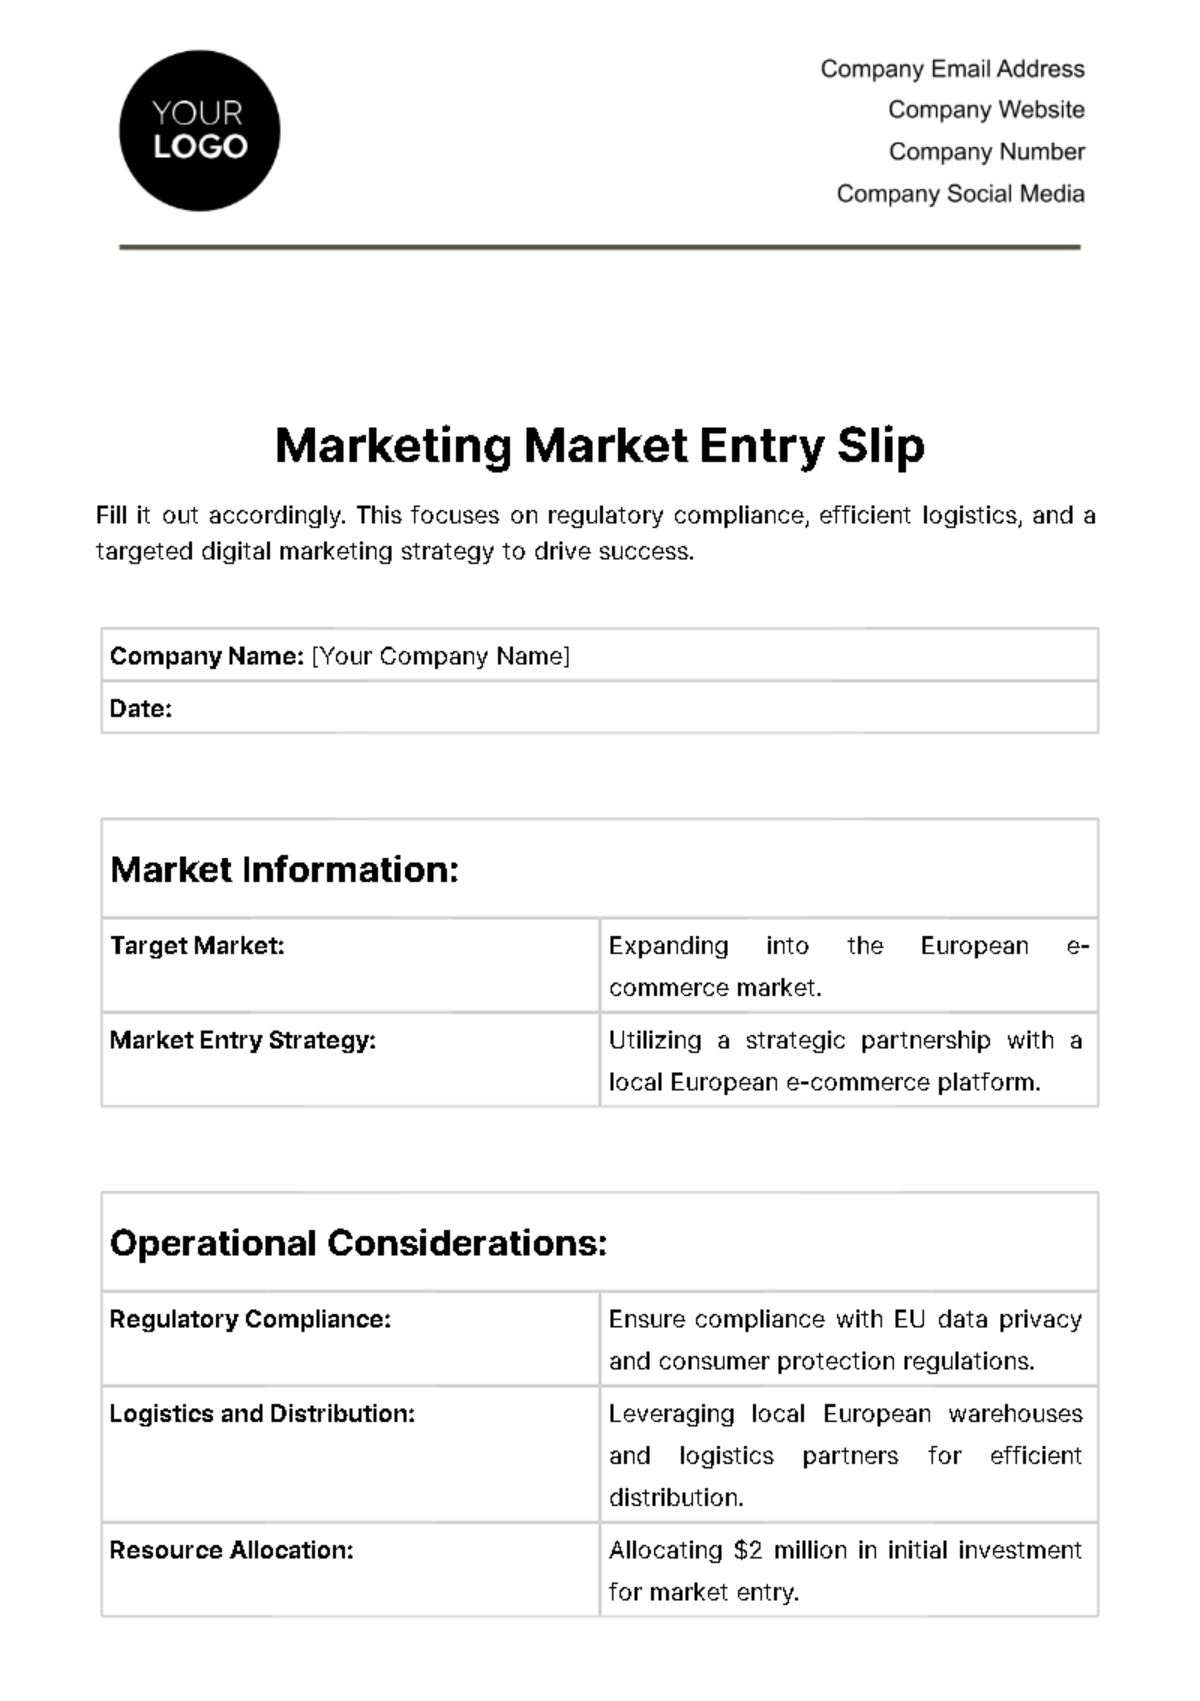 Marketing Market Entry Slip Template